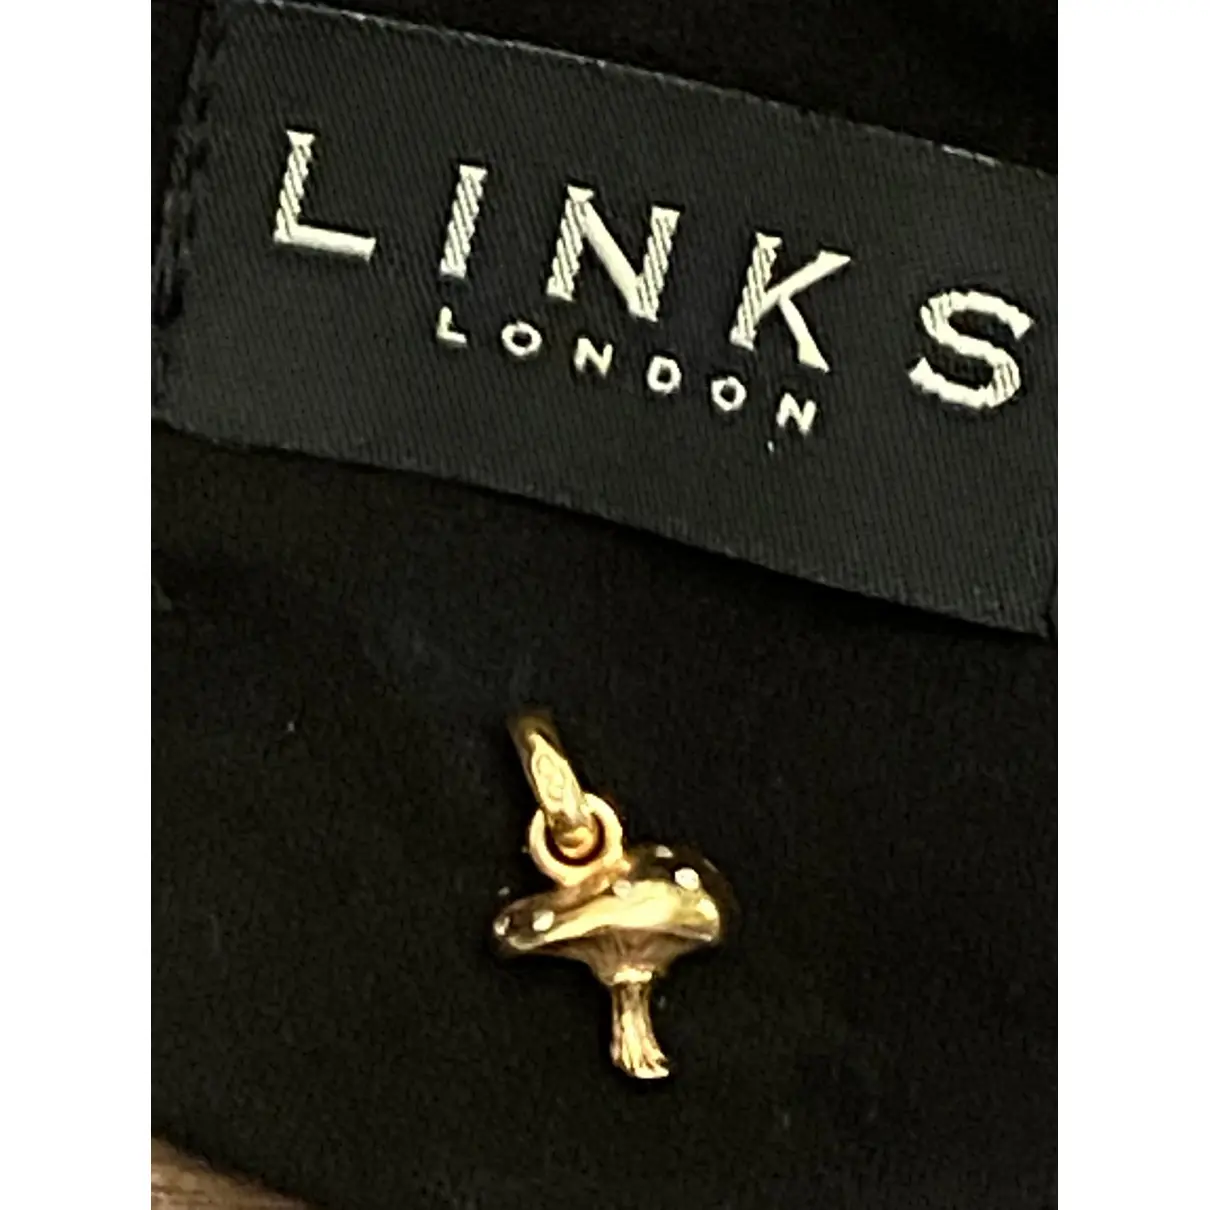 Buy Links Of London Yellow gold pendant online